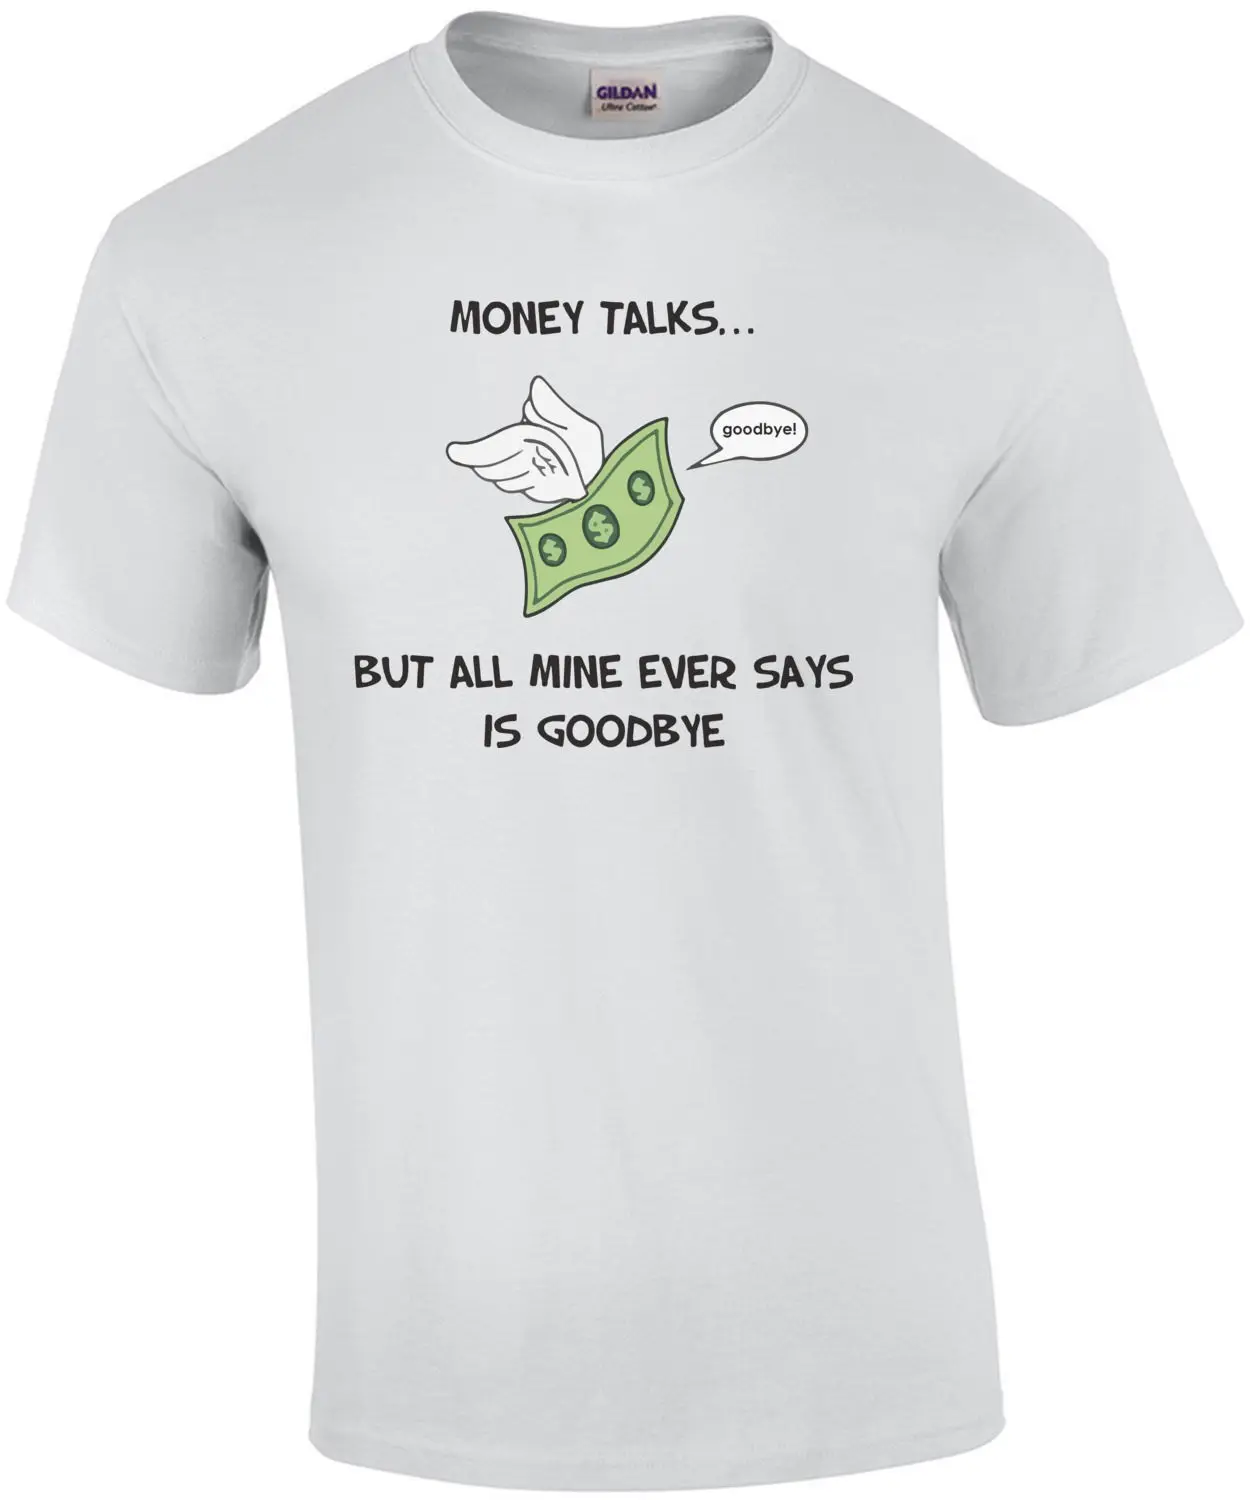 Money talks 3. Money for nothing футболка. Money talks футболка. Футболка деньги на ветер. Майка money talk.